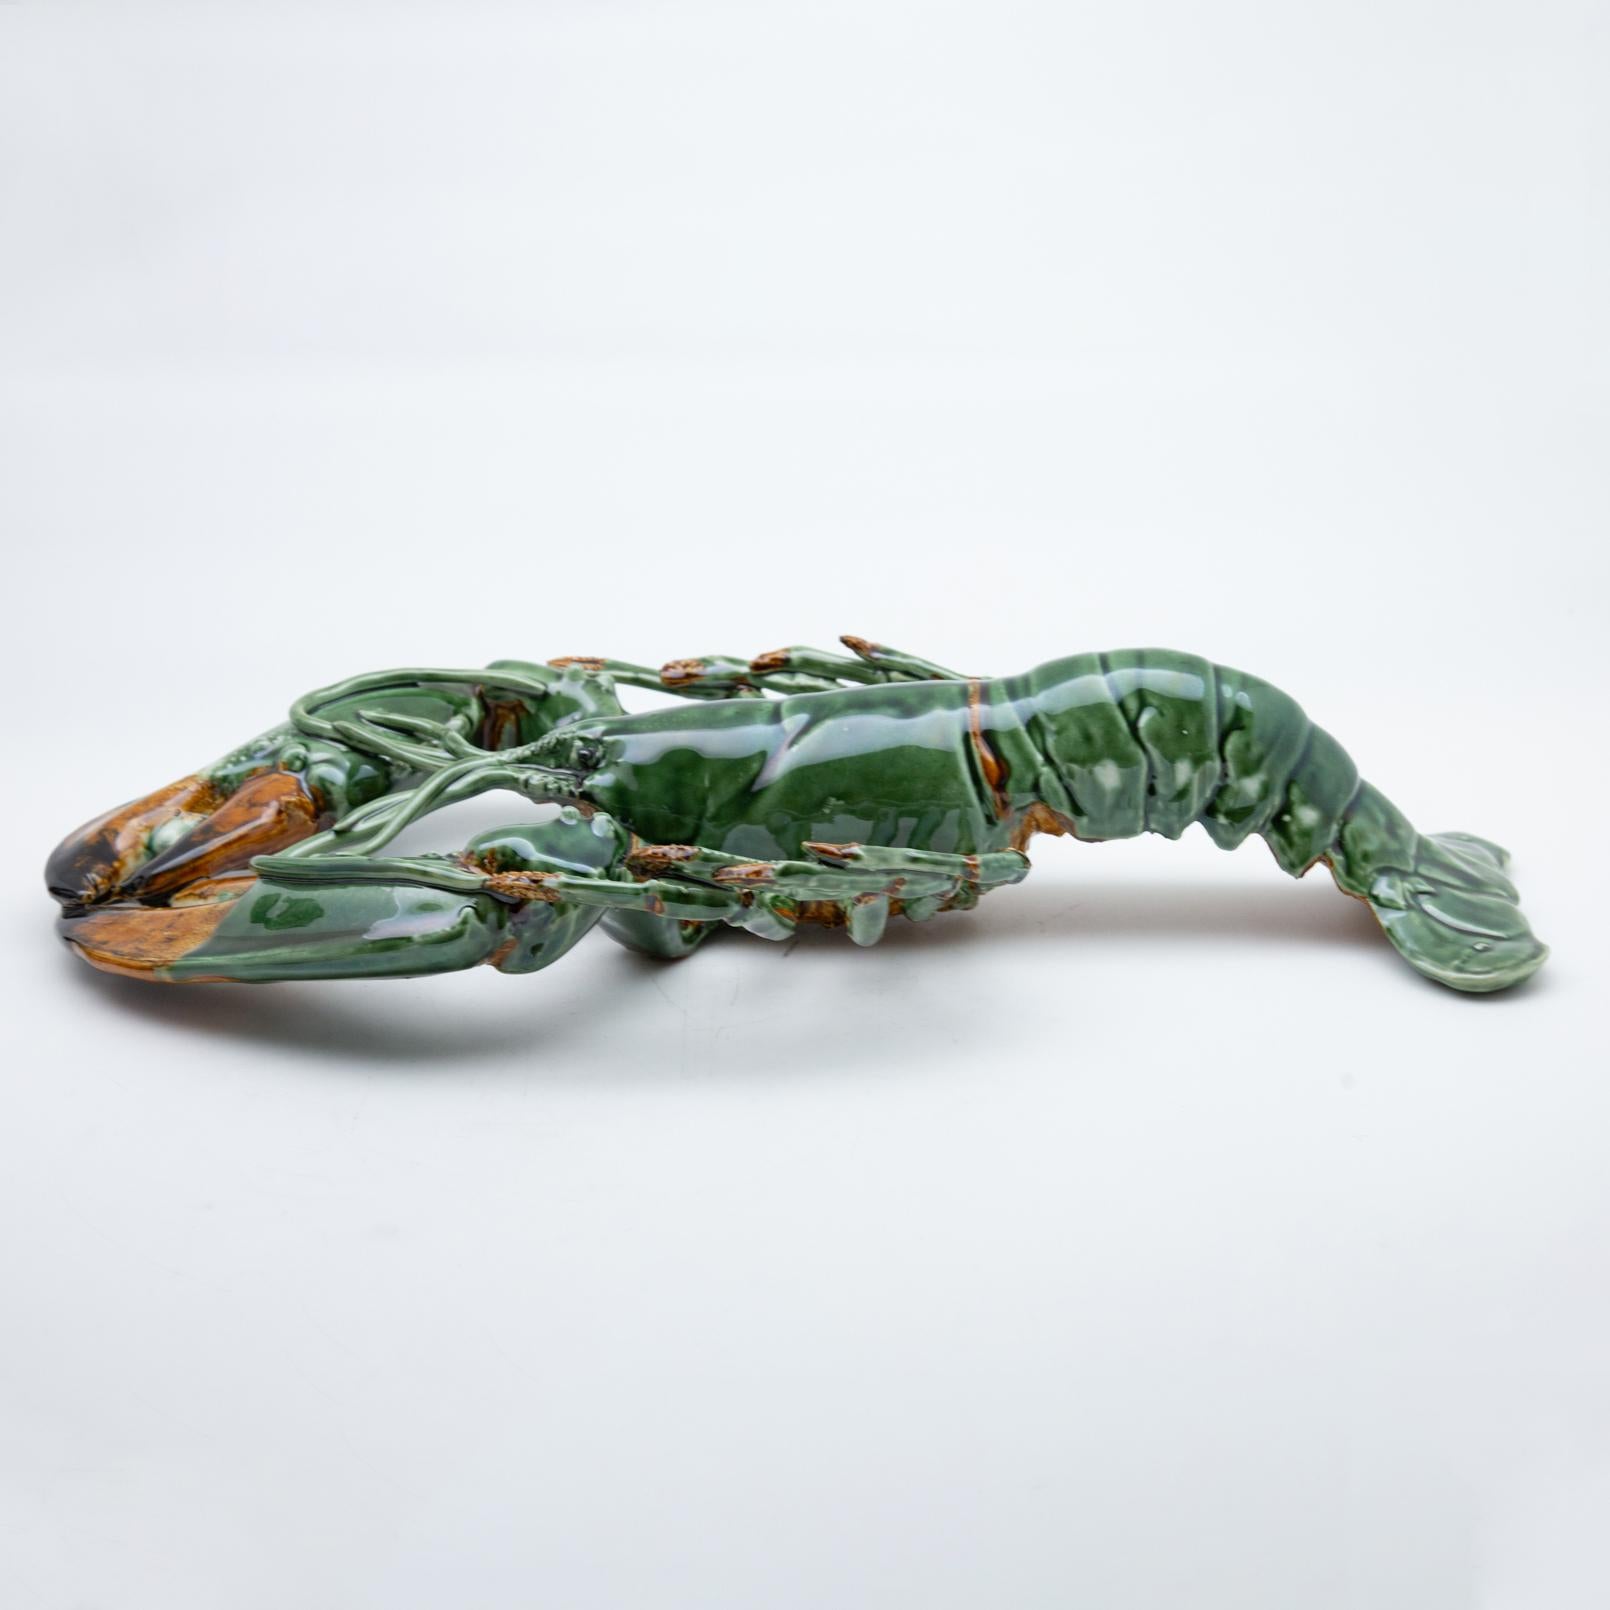 Portuguese Handmade Pallissy or Majollica Large Green Ceramic Crab 1